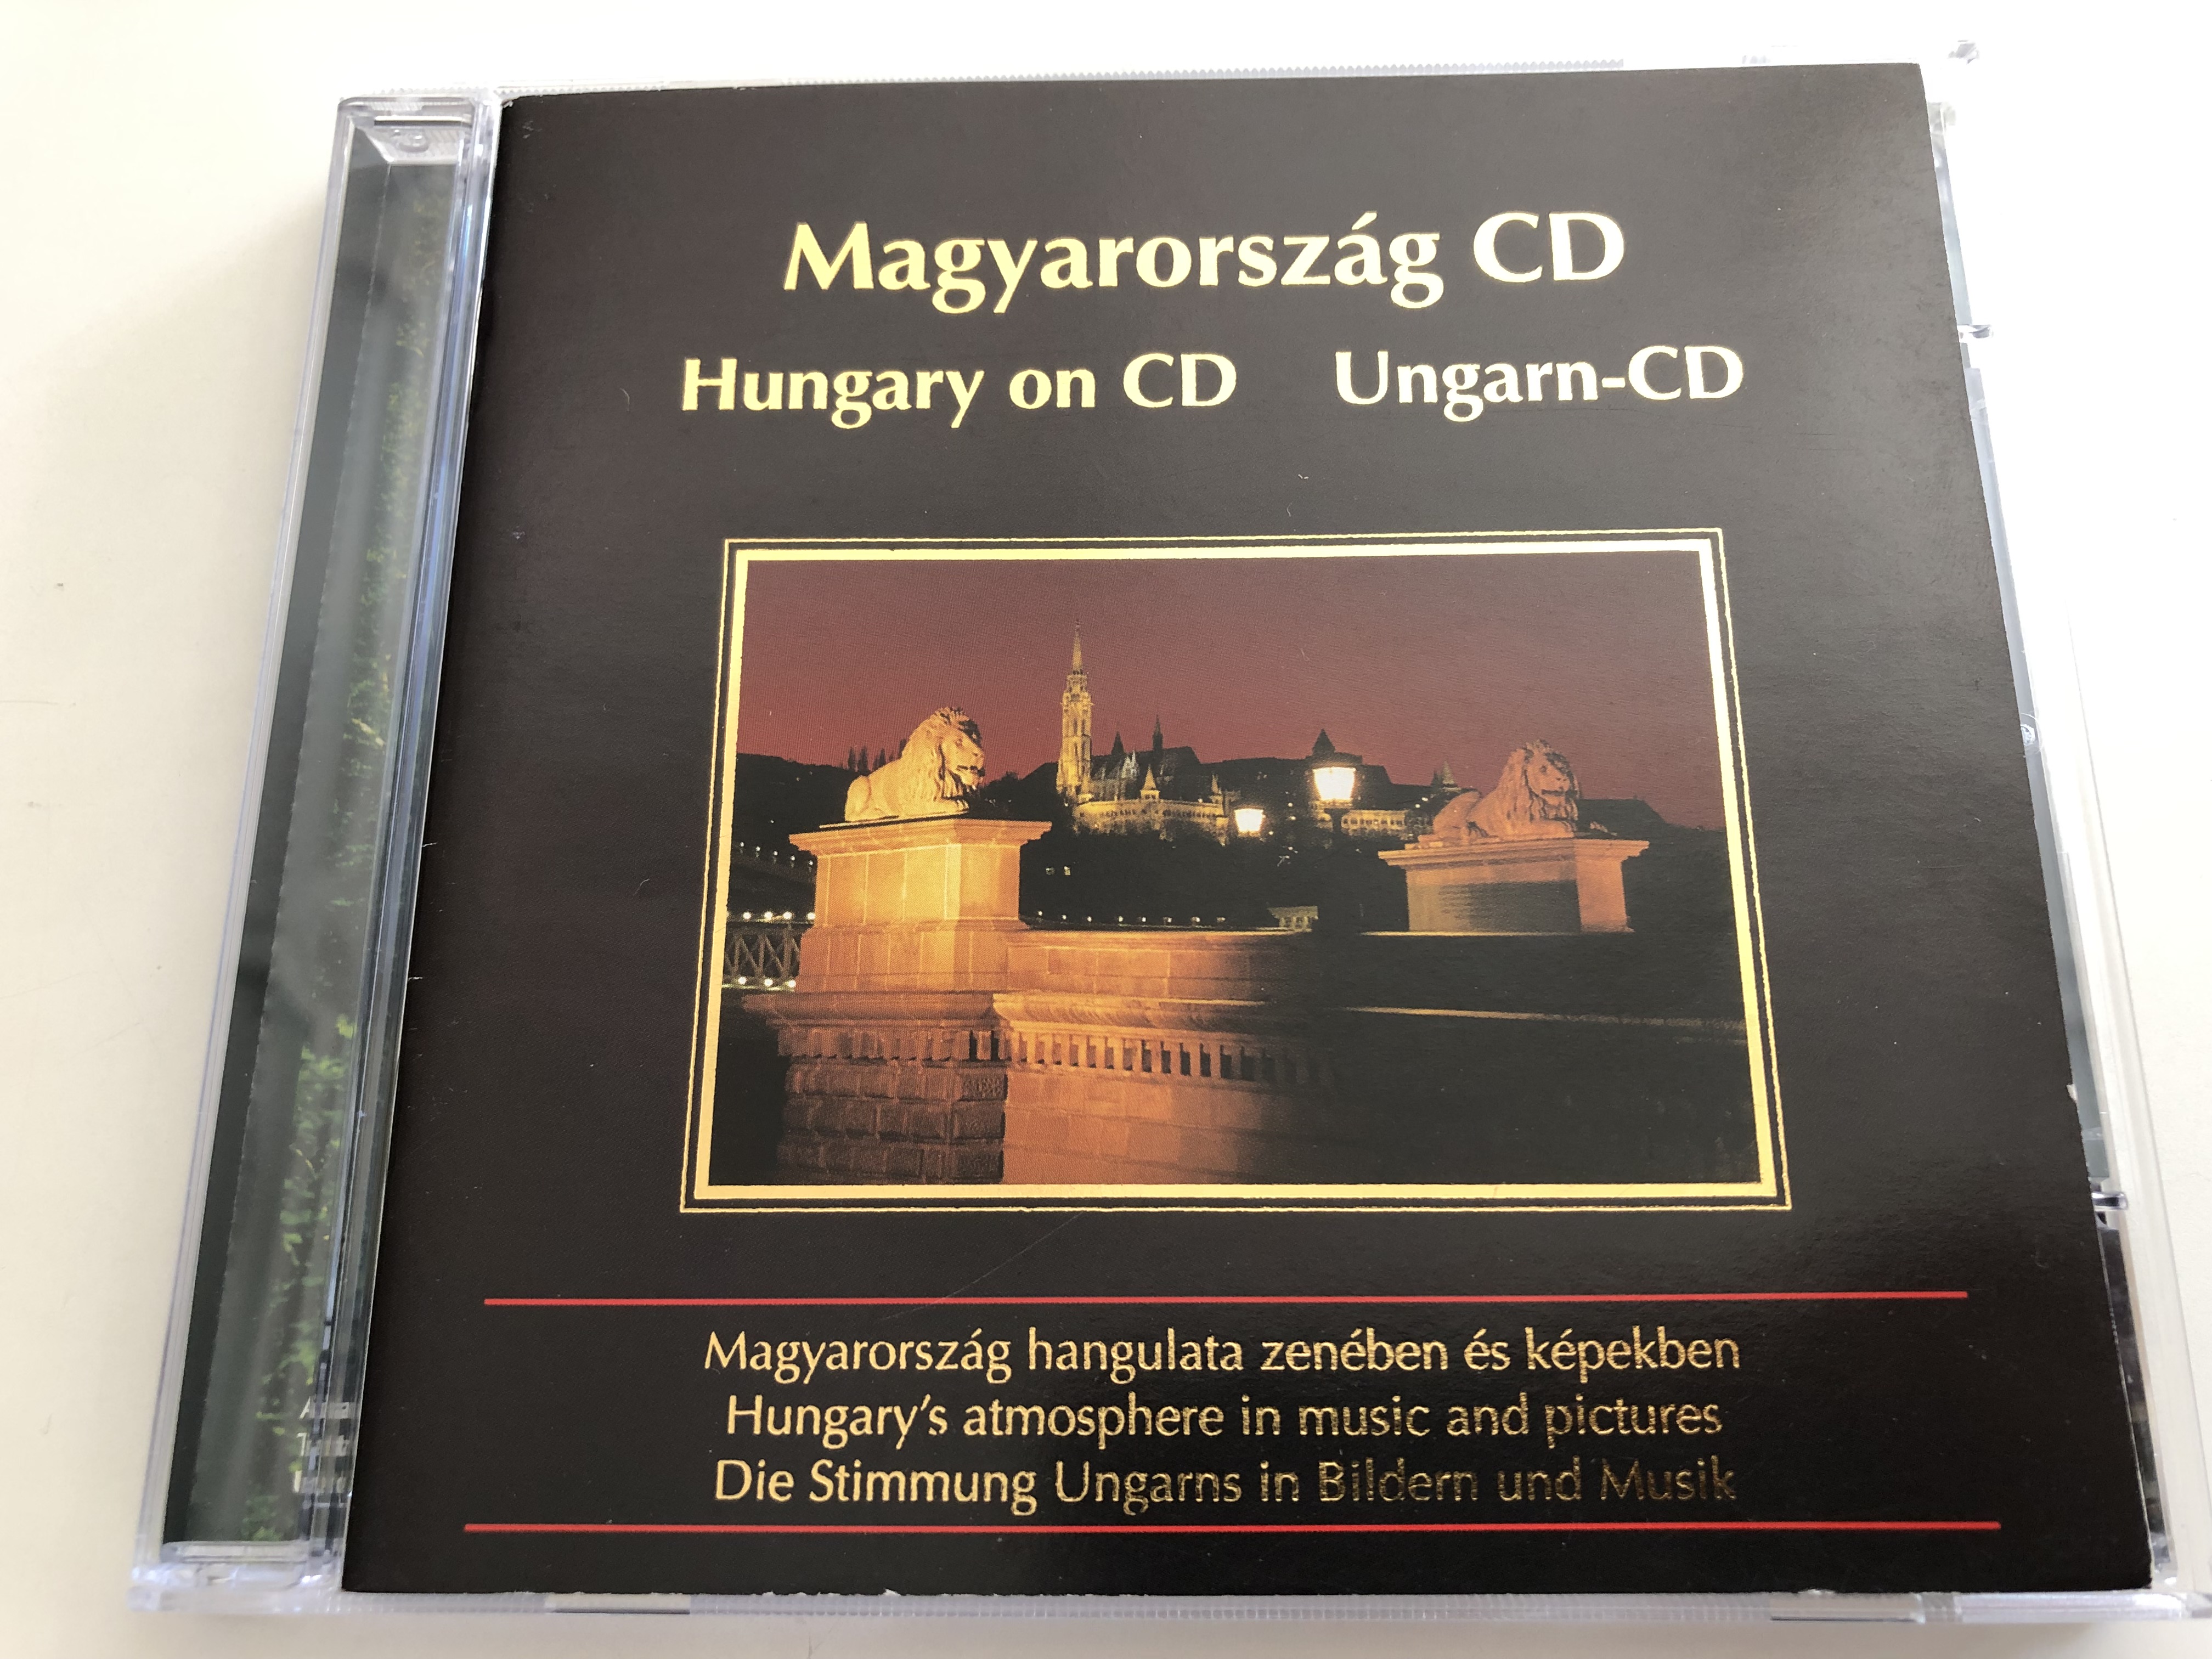 hungary-on-cd-magyarorsz-g-cd-ungarn-cd-magyarorsz-g-hangulata-zen-ben-s-k-pekben-hungary-s-atmosphere-in-music-and-pictures-audio-cd-1996-eamcd-2527-1-.jpg